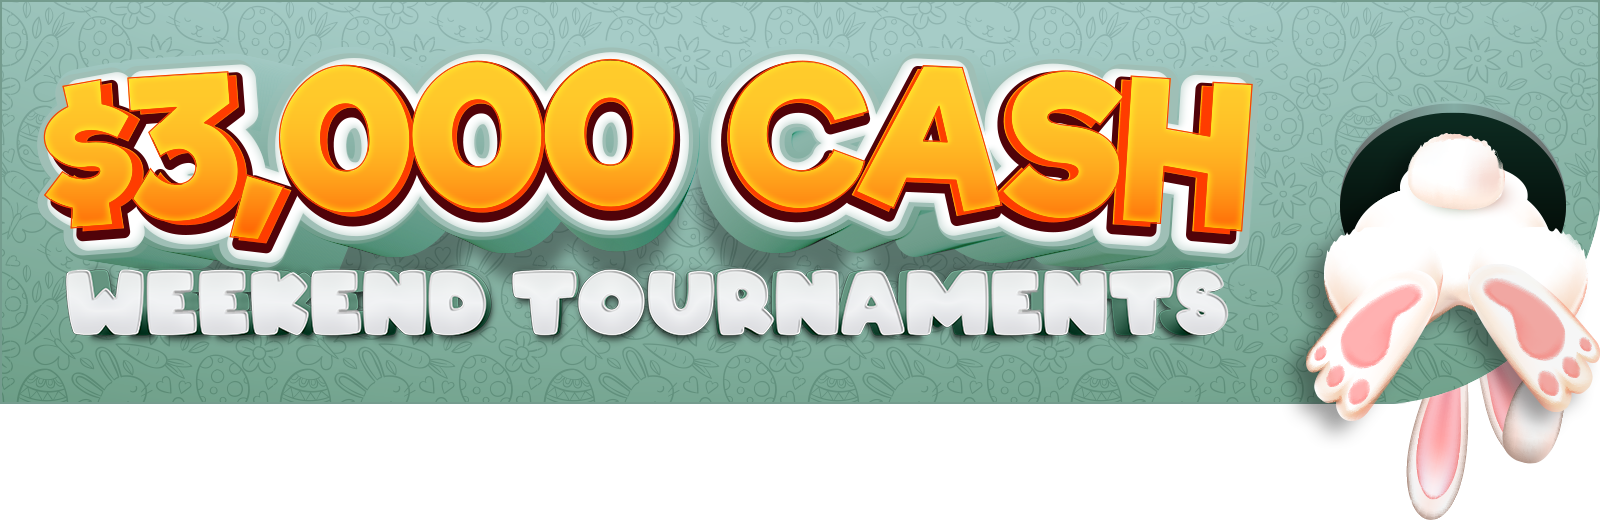 $3,000 Weekend Tournament!